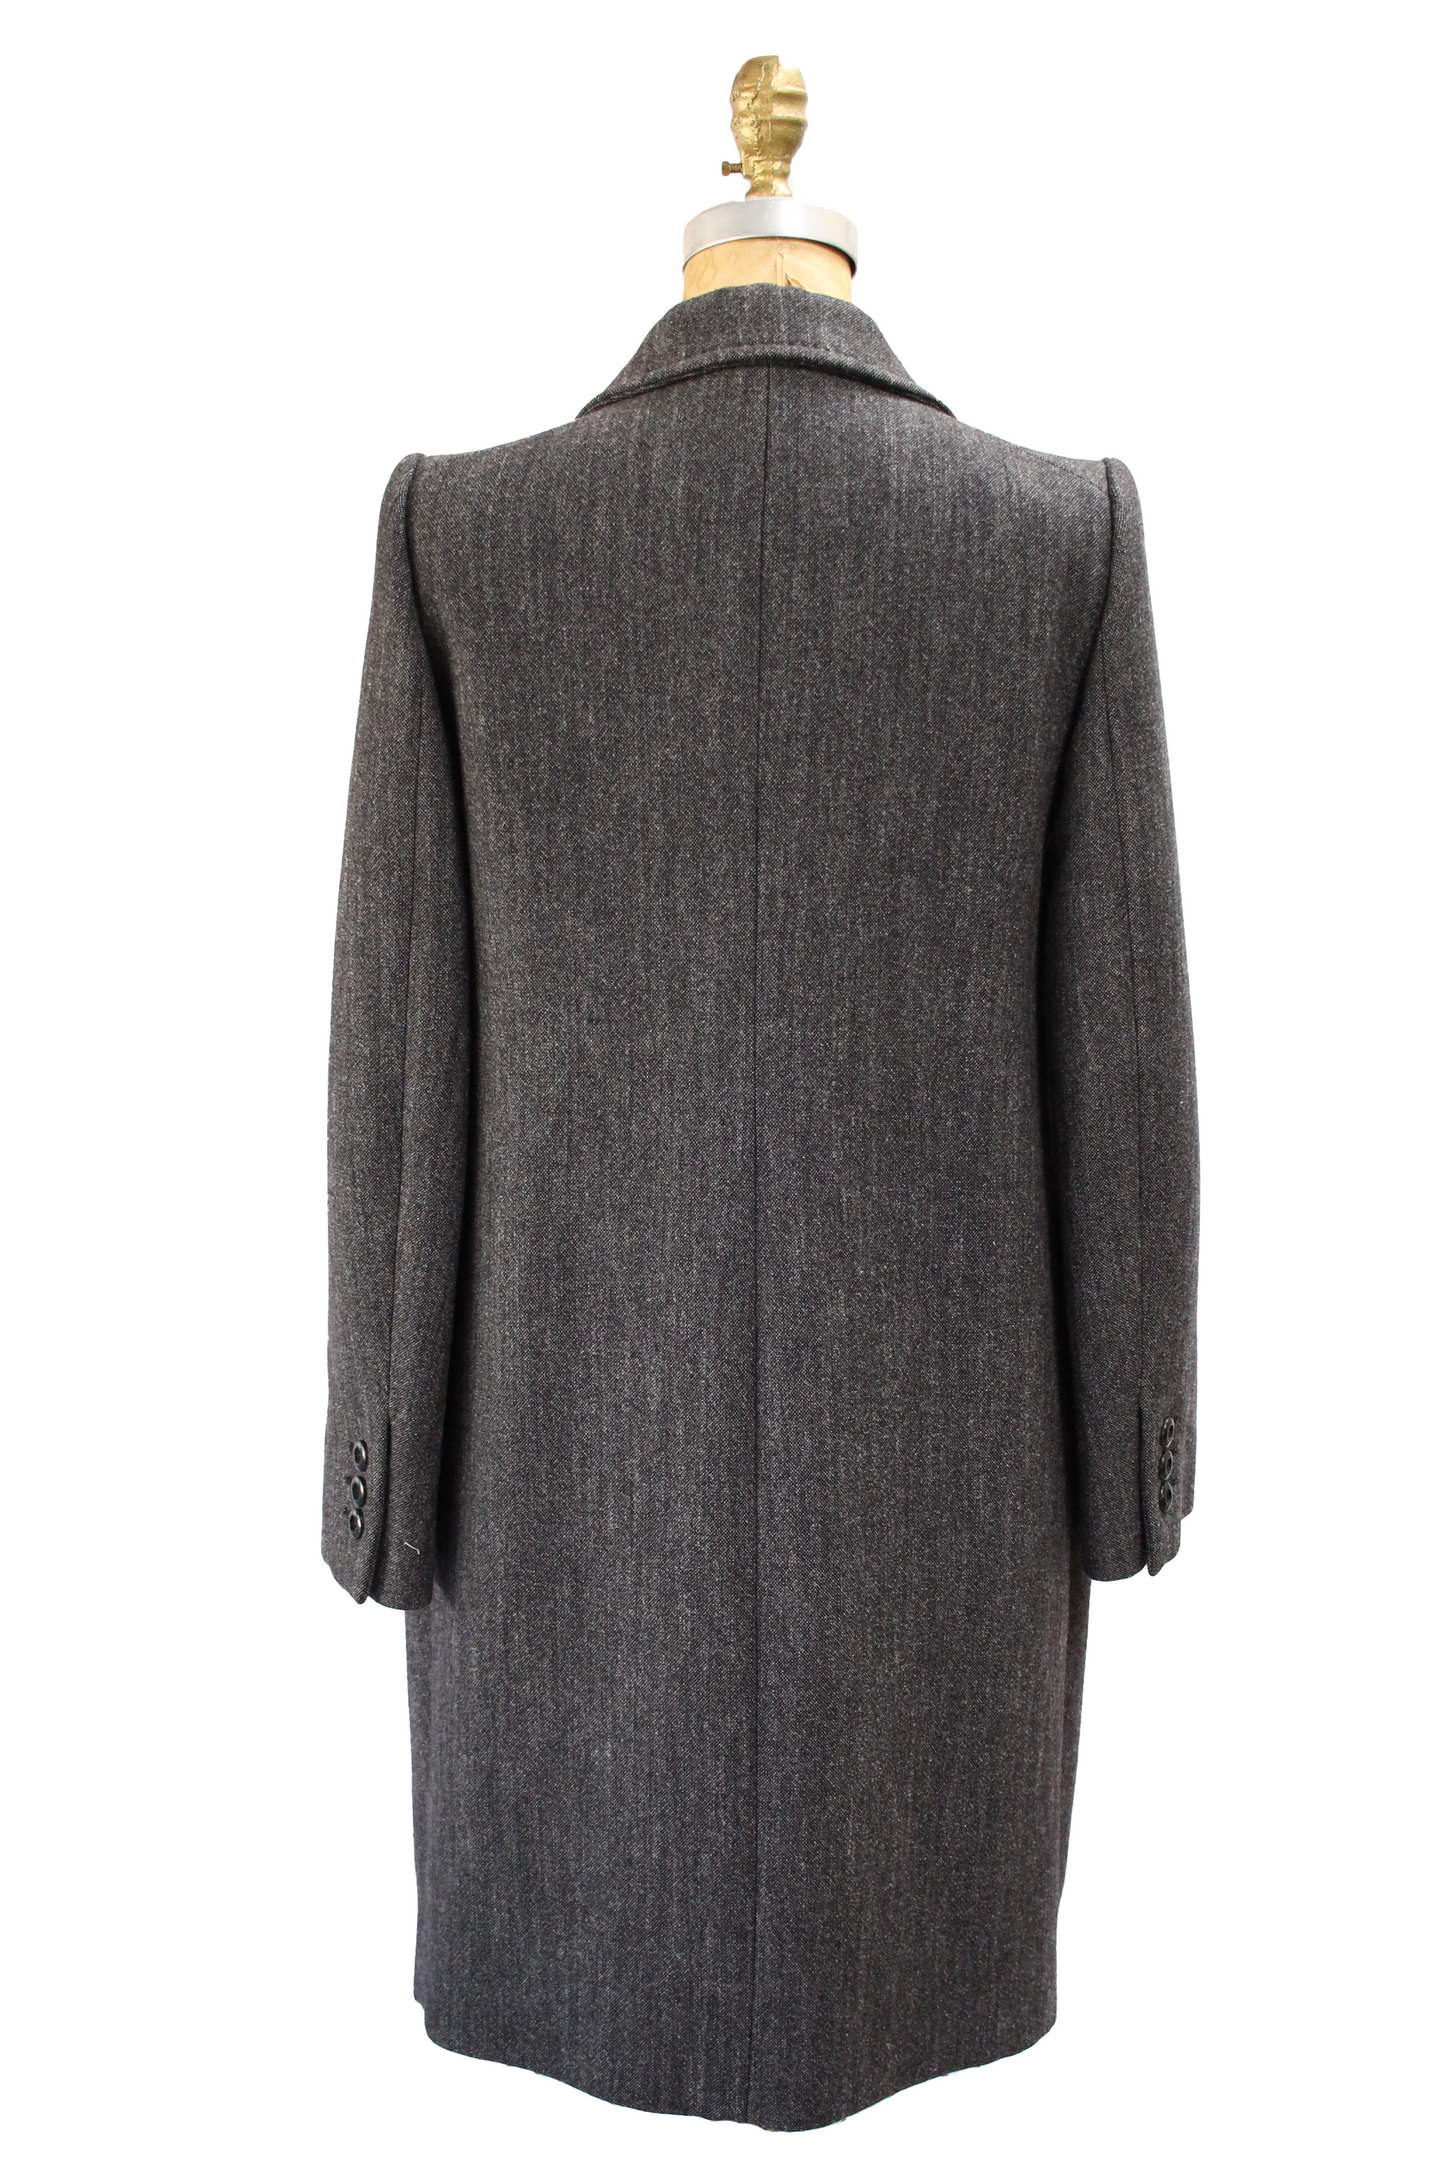 Moschino NWT Grey Opera Coat